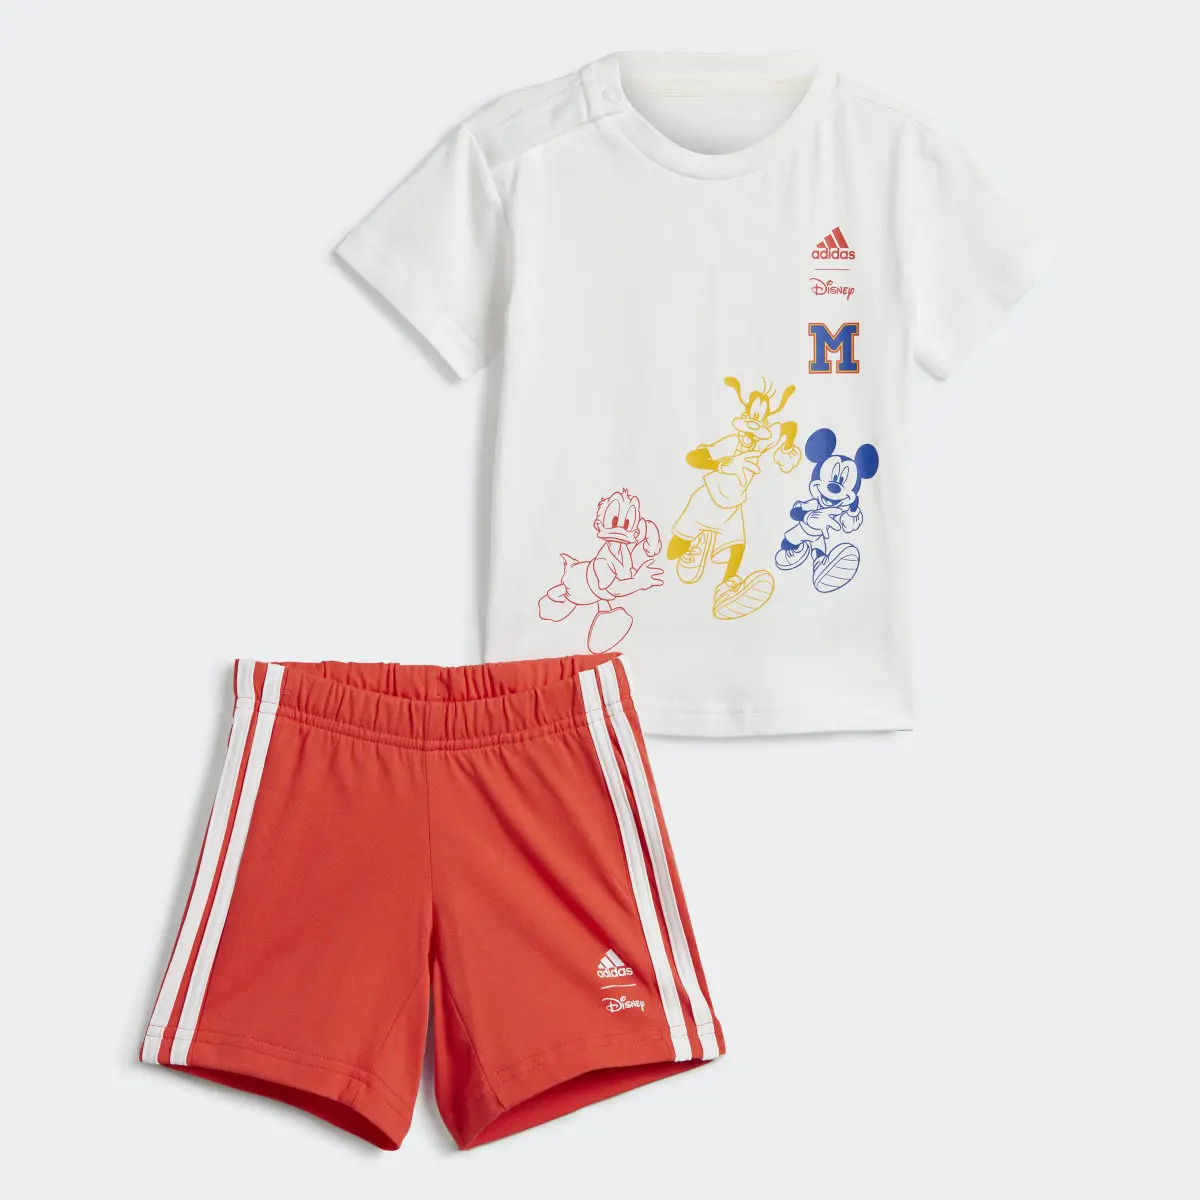 Adidas x Disney Mickey Mouse Tee and Shorts Set. 2